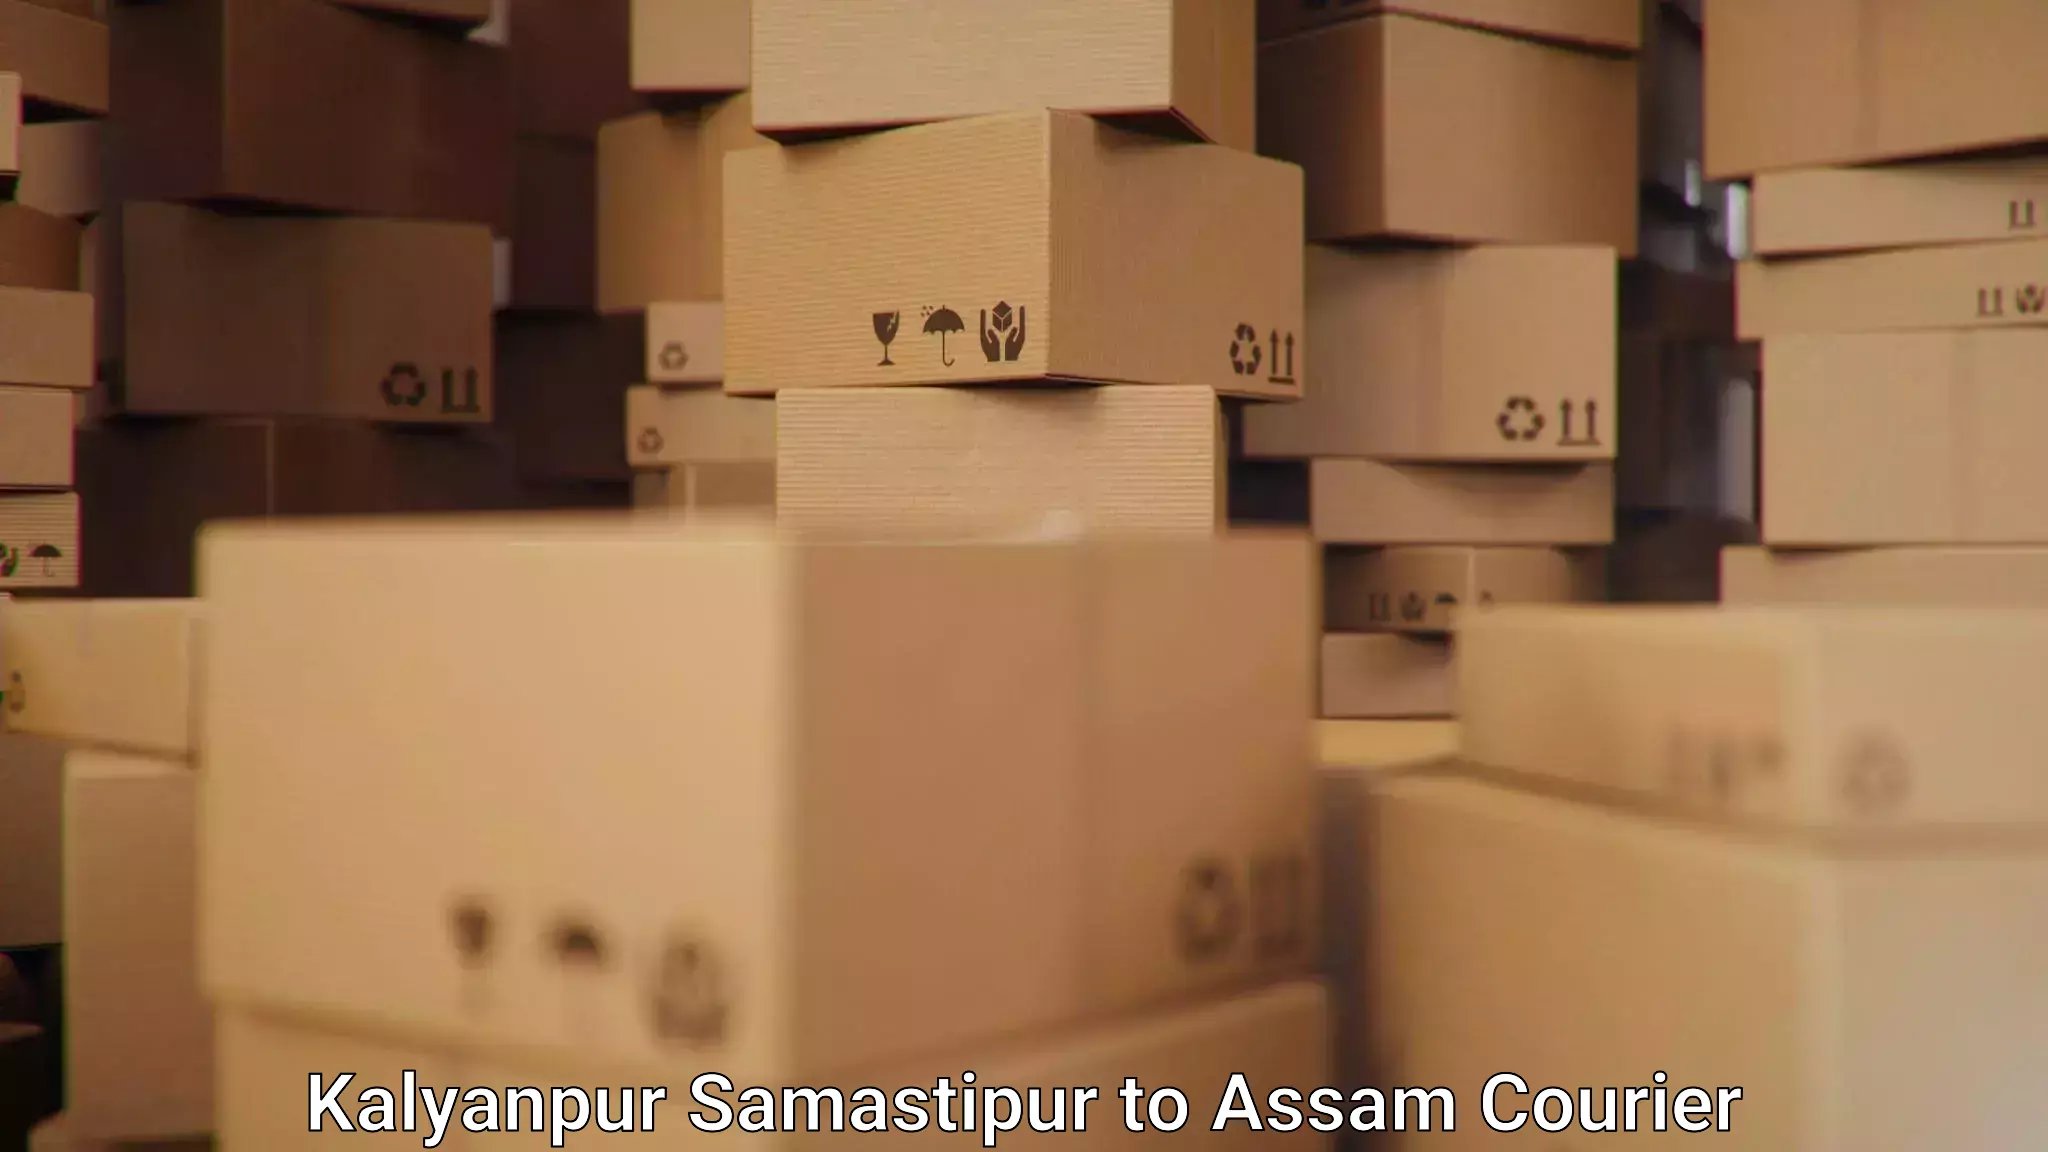 Courier service booking Kalyanpur Samastipur to Bhergaon